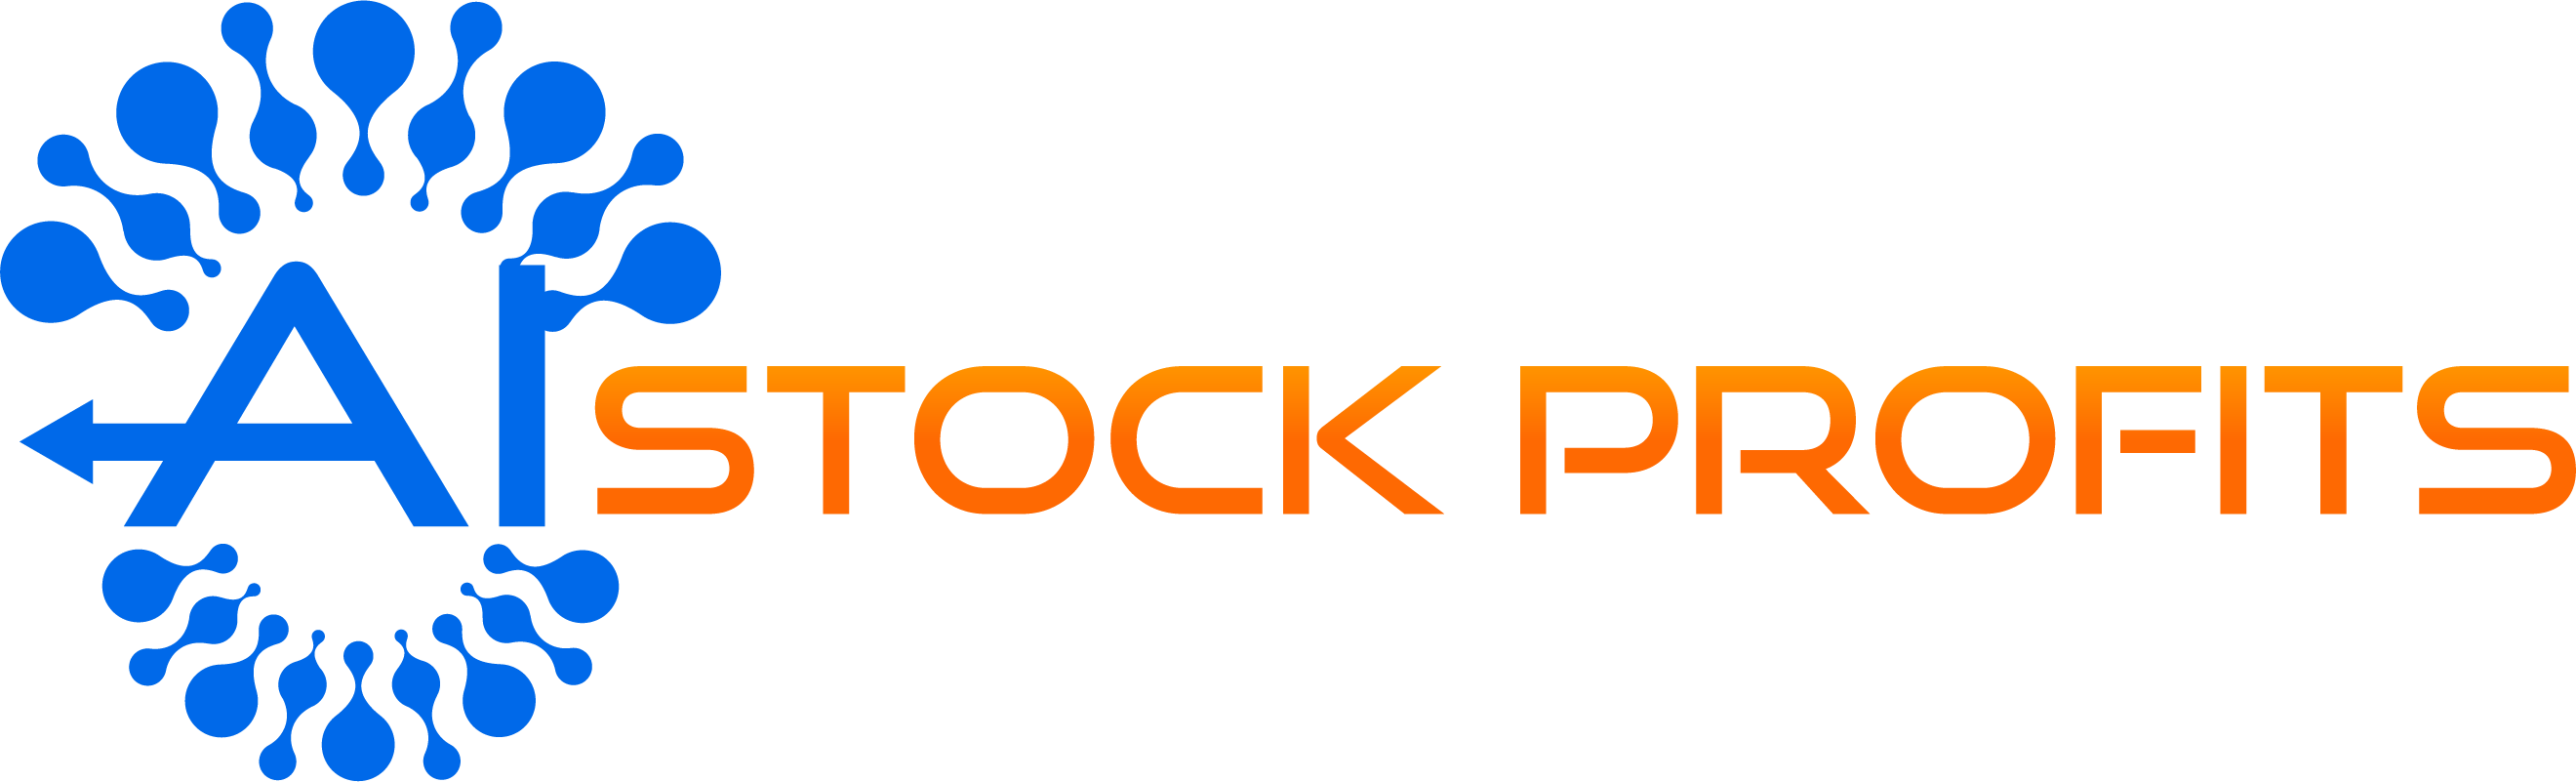 Ai Stock Profit App - 立即开立免费账户